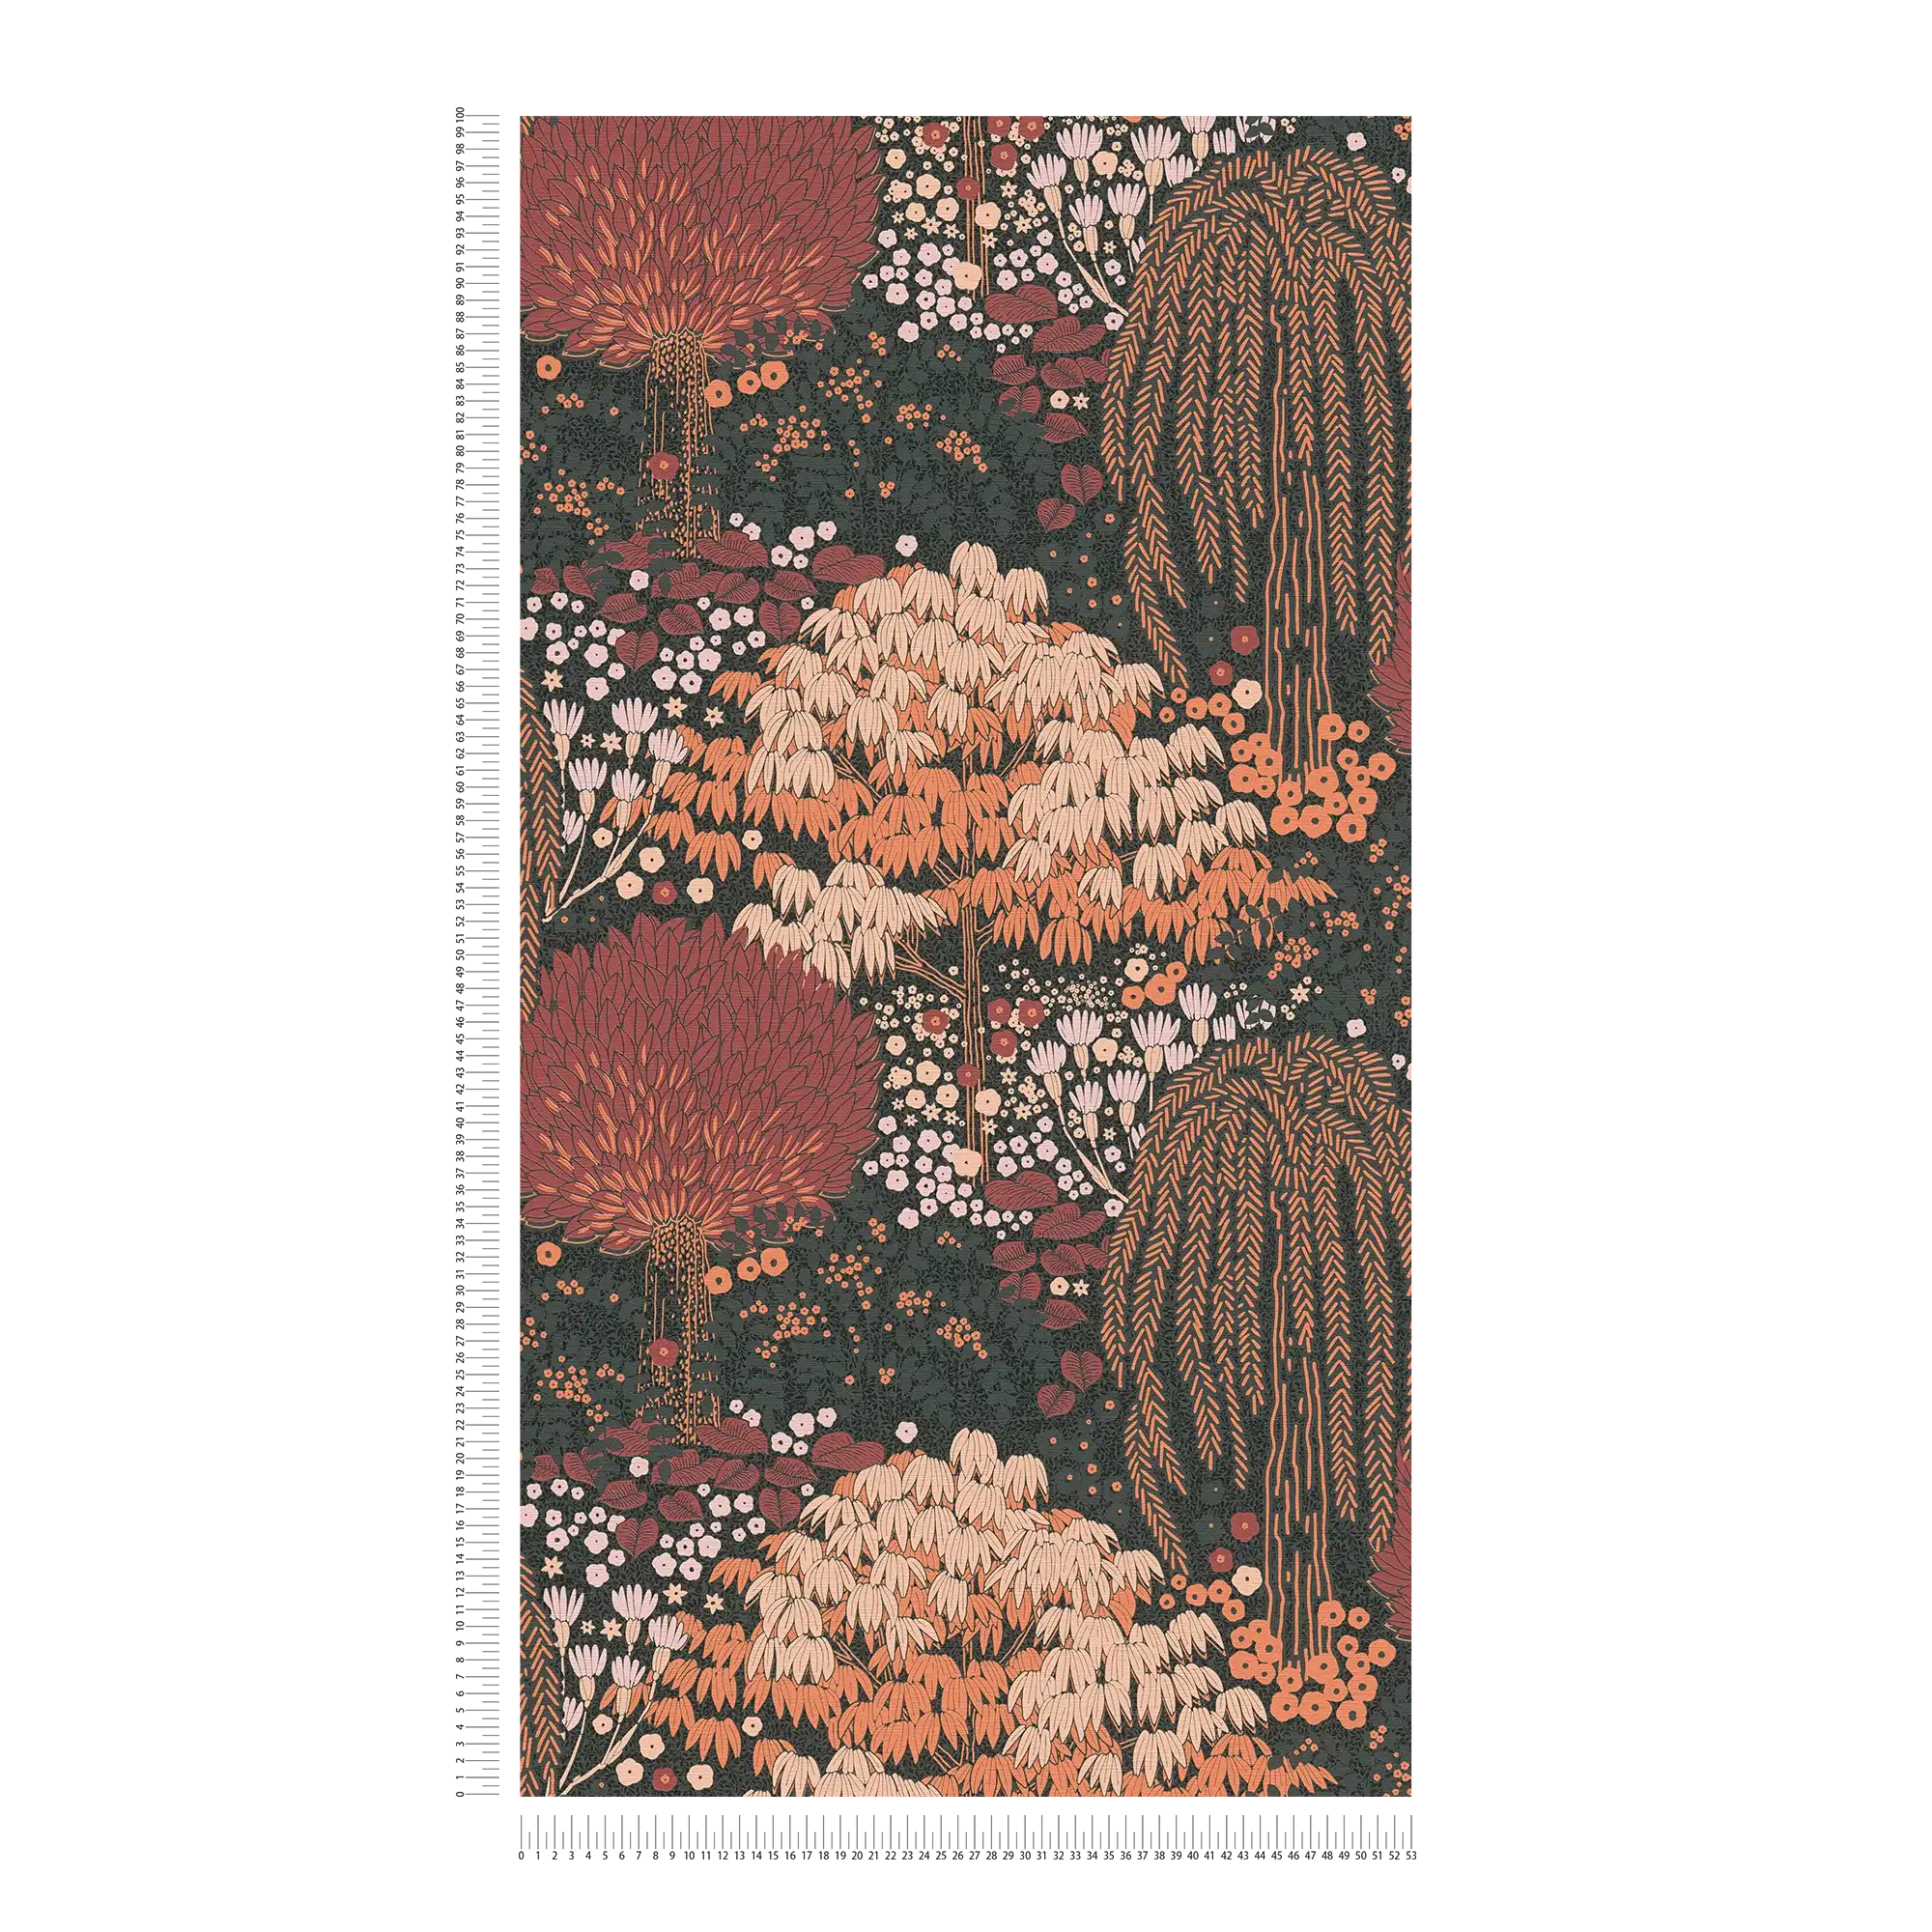             Papel pintado no tejido floral con hojas textura ligera, mate - negro, rojo, rosa
        